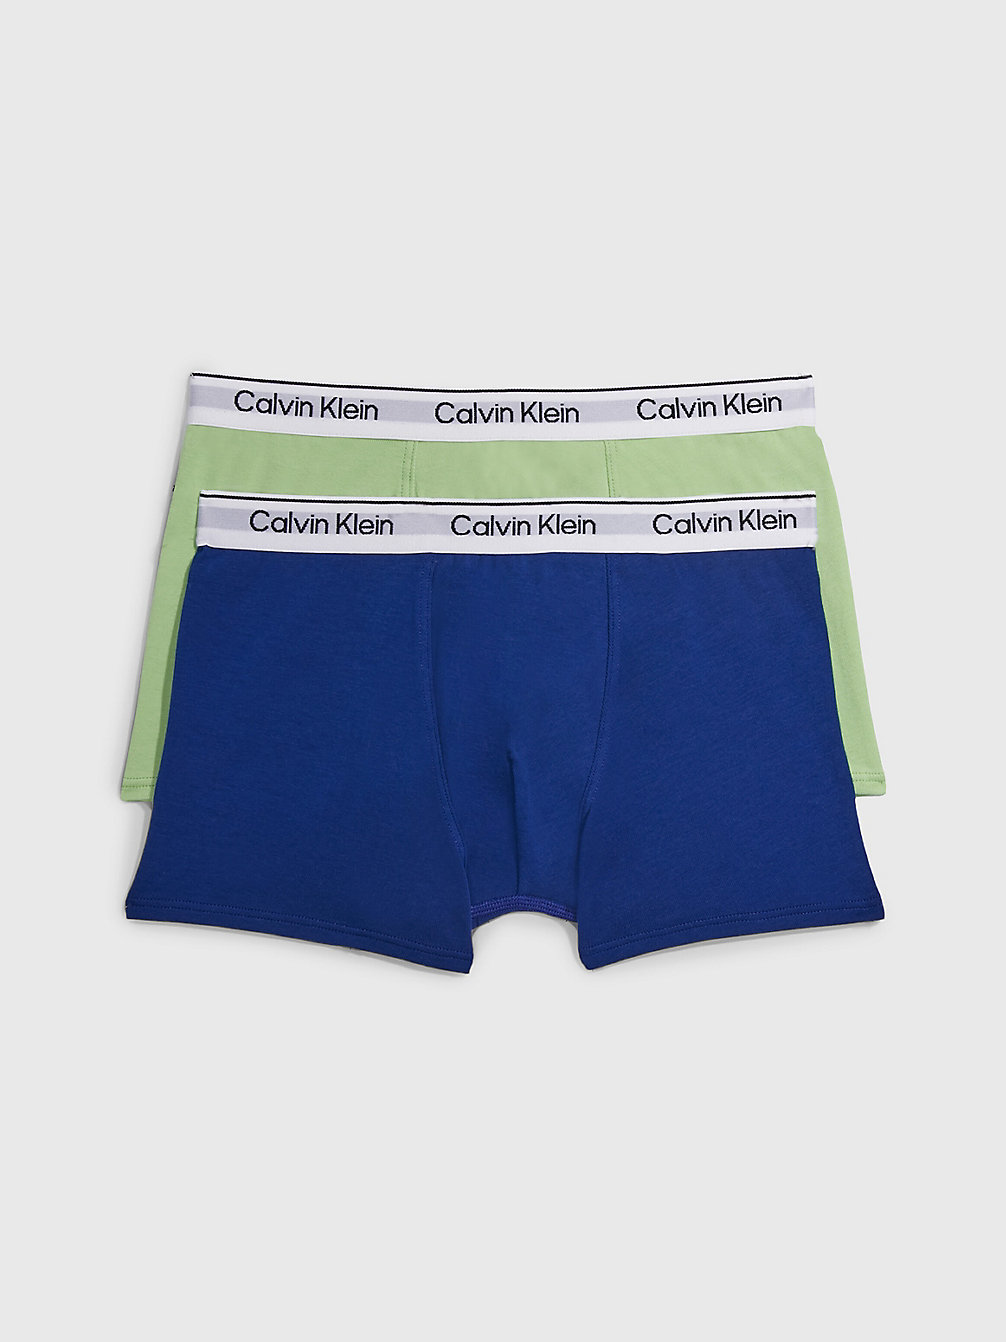 SPRINGFERN/BOLDBLUE Lot De 2 Shortys Pour Garçon - Modern Cotton undefined garcons Calvin Klein